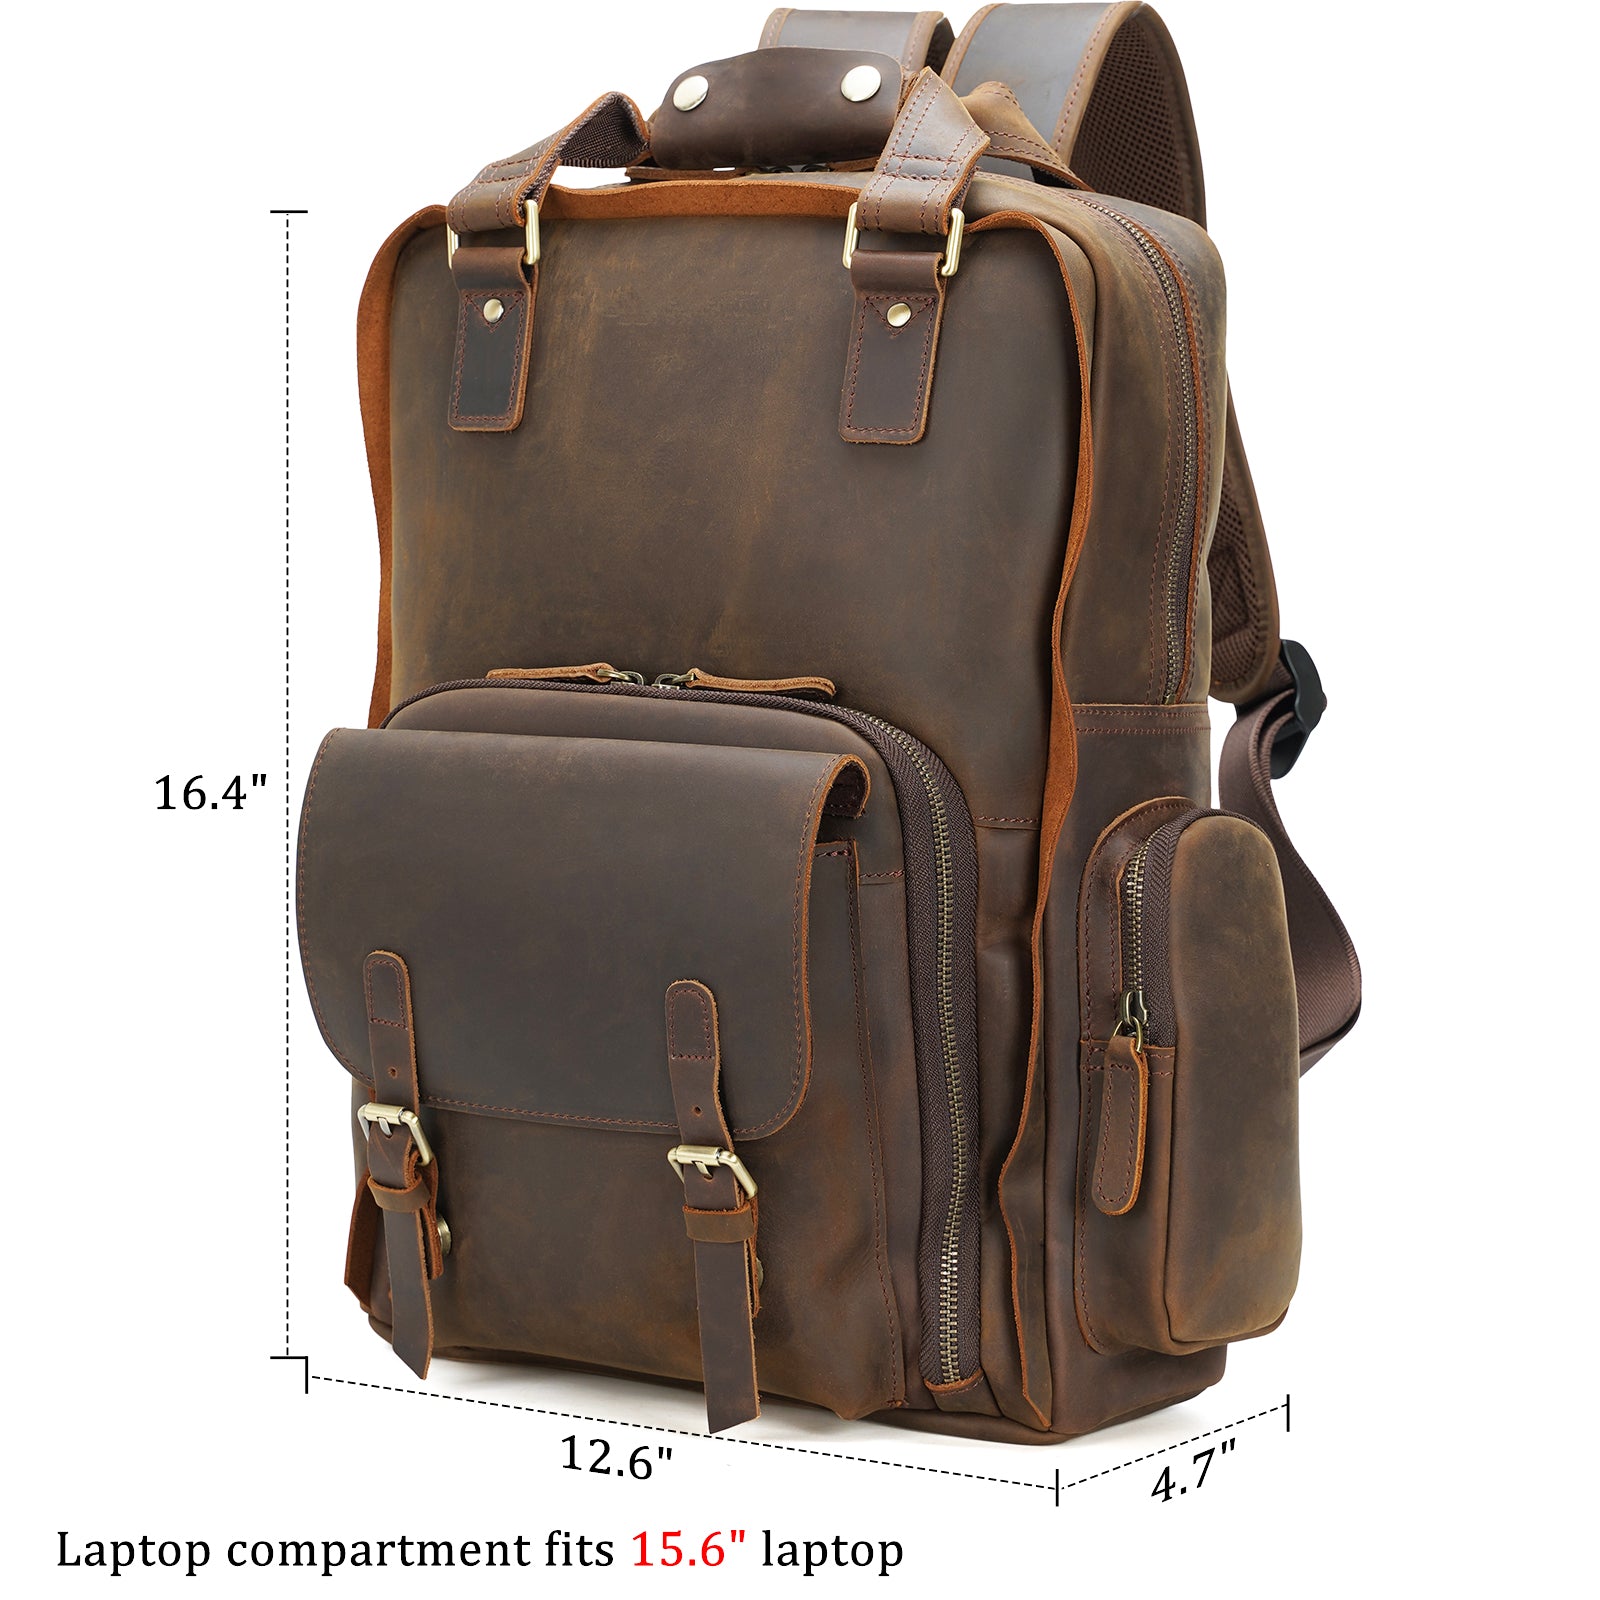 Leather Laptop Bag Vintage Travel Hiking Duffle Backpack Shopping